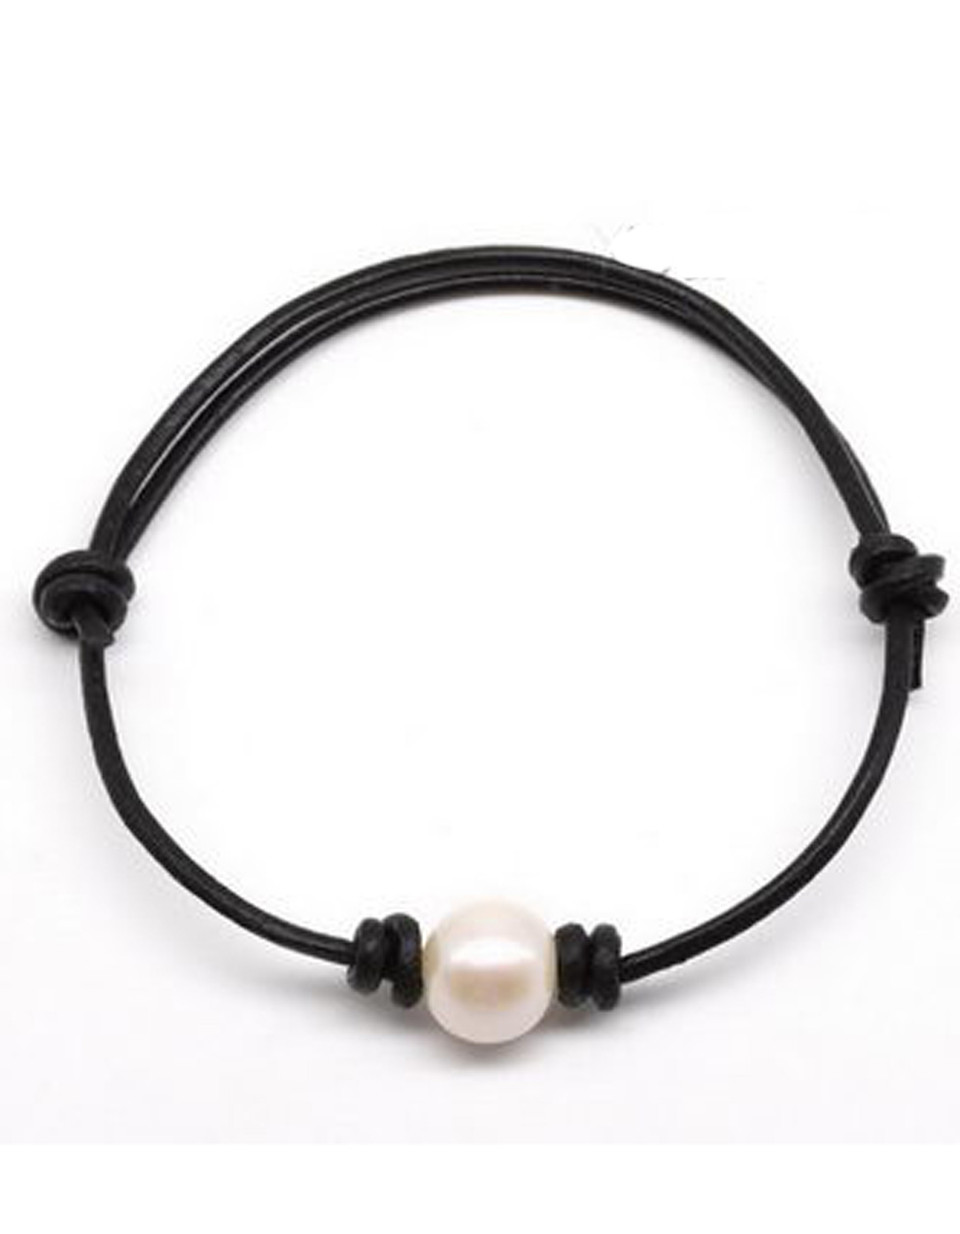 Freshwater Single White or Peacock Pearl Adjustable Leather Bracelet ...